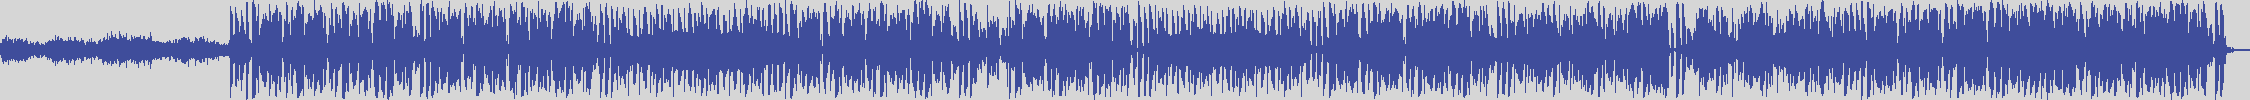 coverland_records [smile1179] Don Lore V - 24k Magic [Instrumental] audio wave form